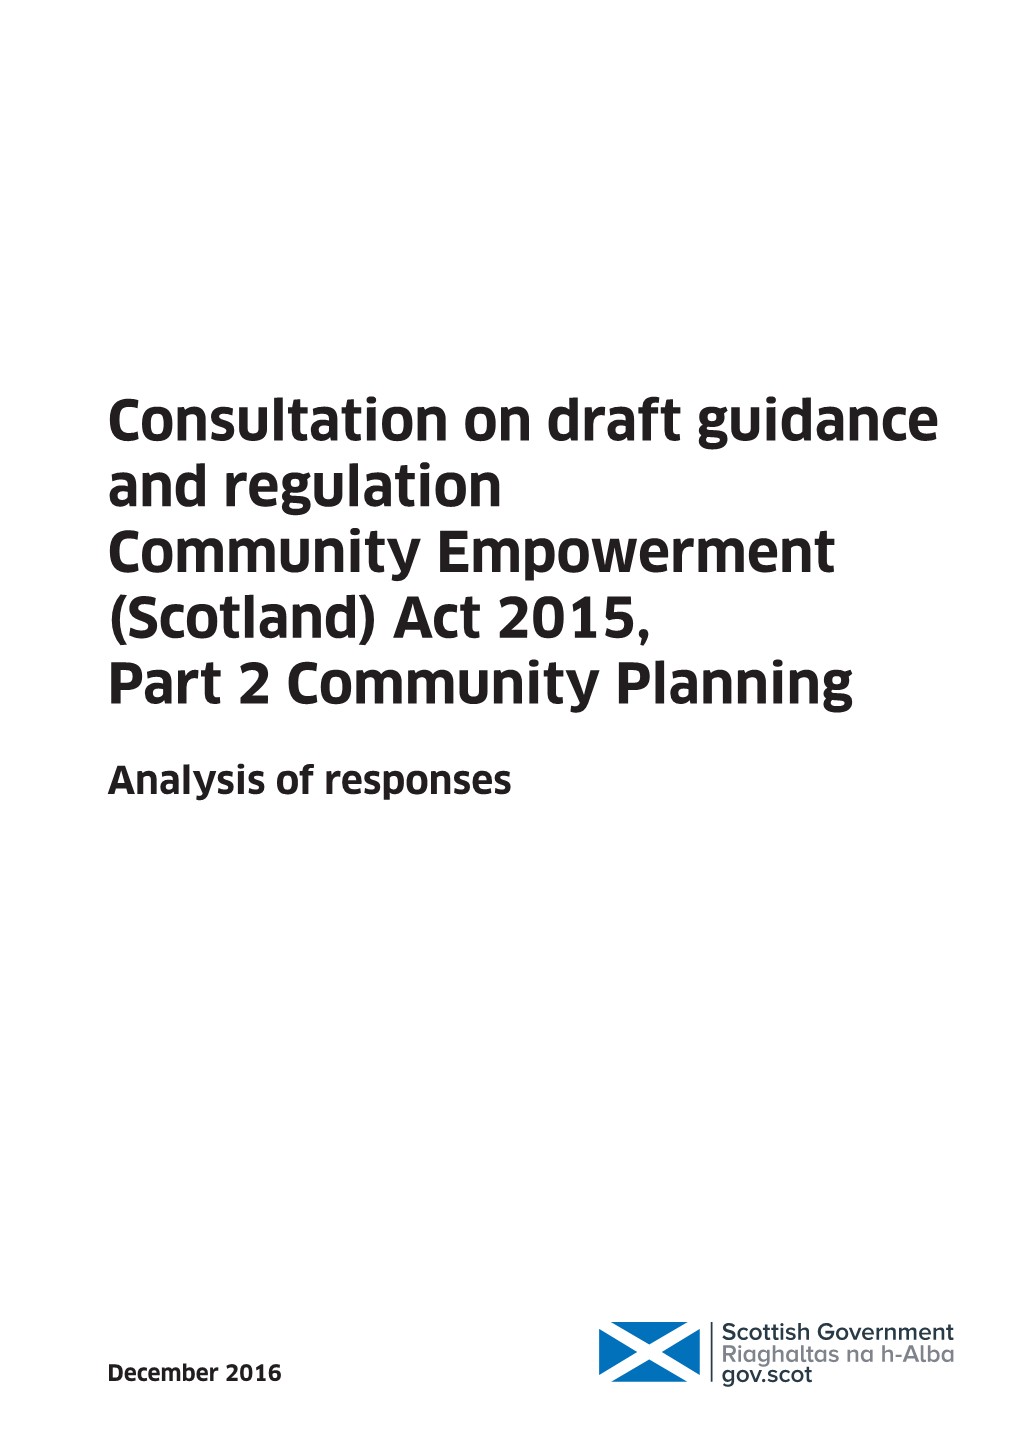 Consultation on Draft Guidance and Regulation Community Empowerment (Scotland) Act 2015, Part 2 Community Planning